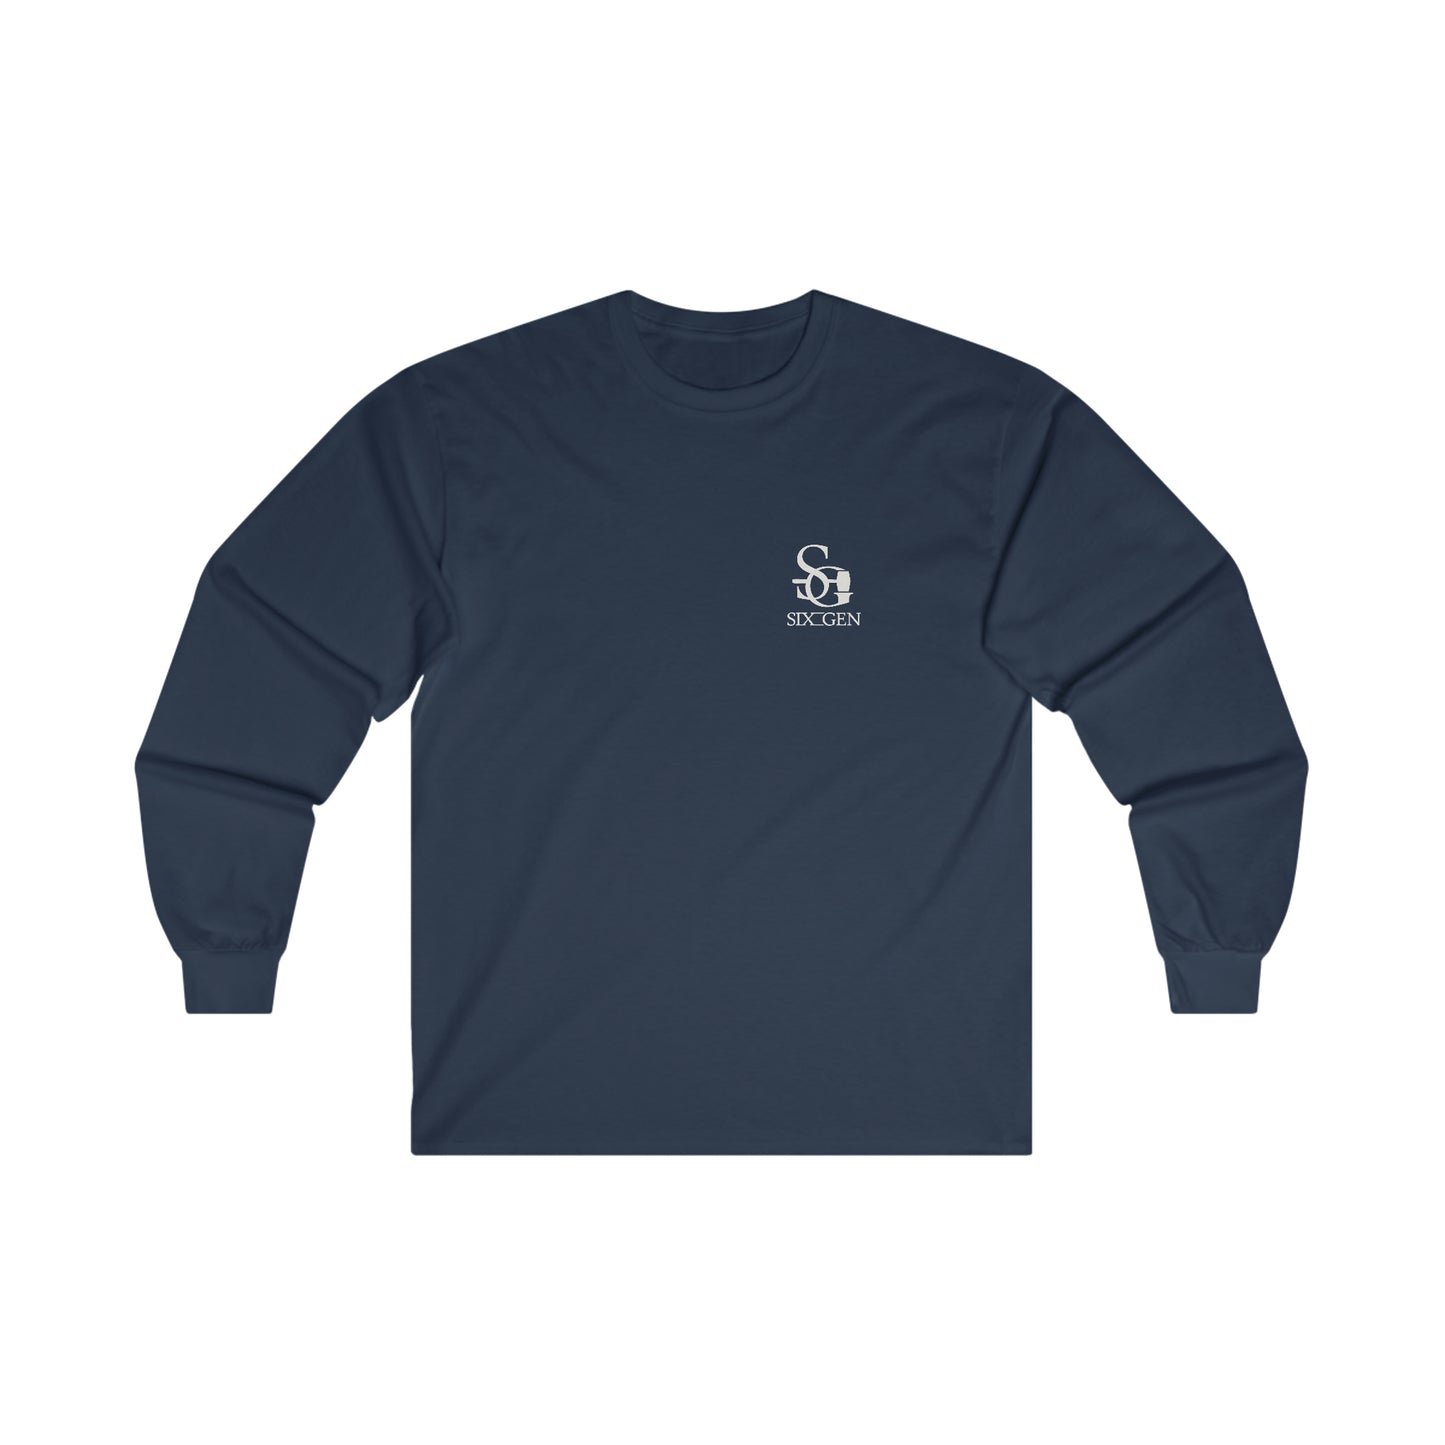 Six-Gen Forge Long Sleeve Cotton T Shirt